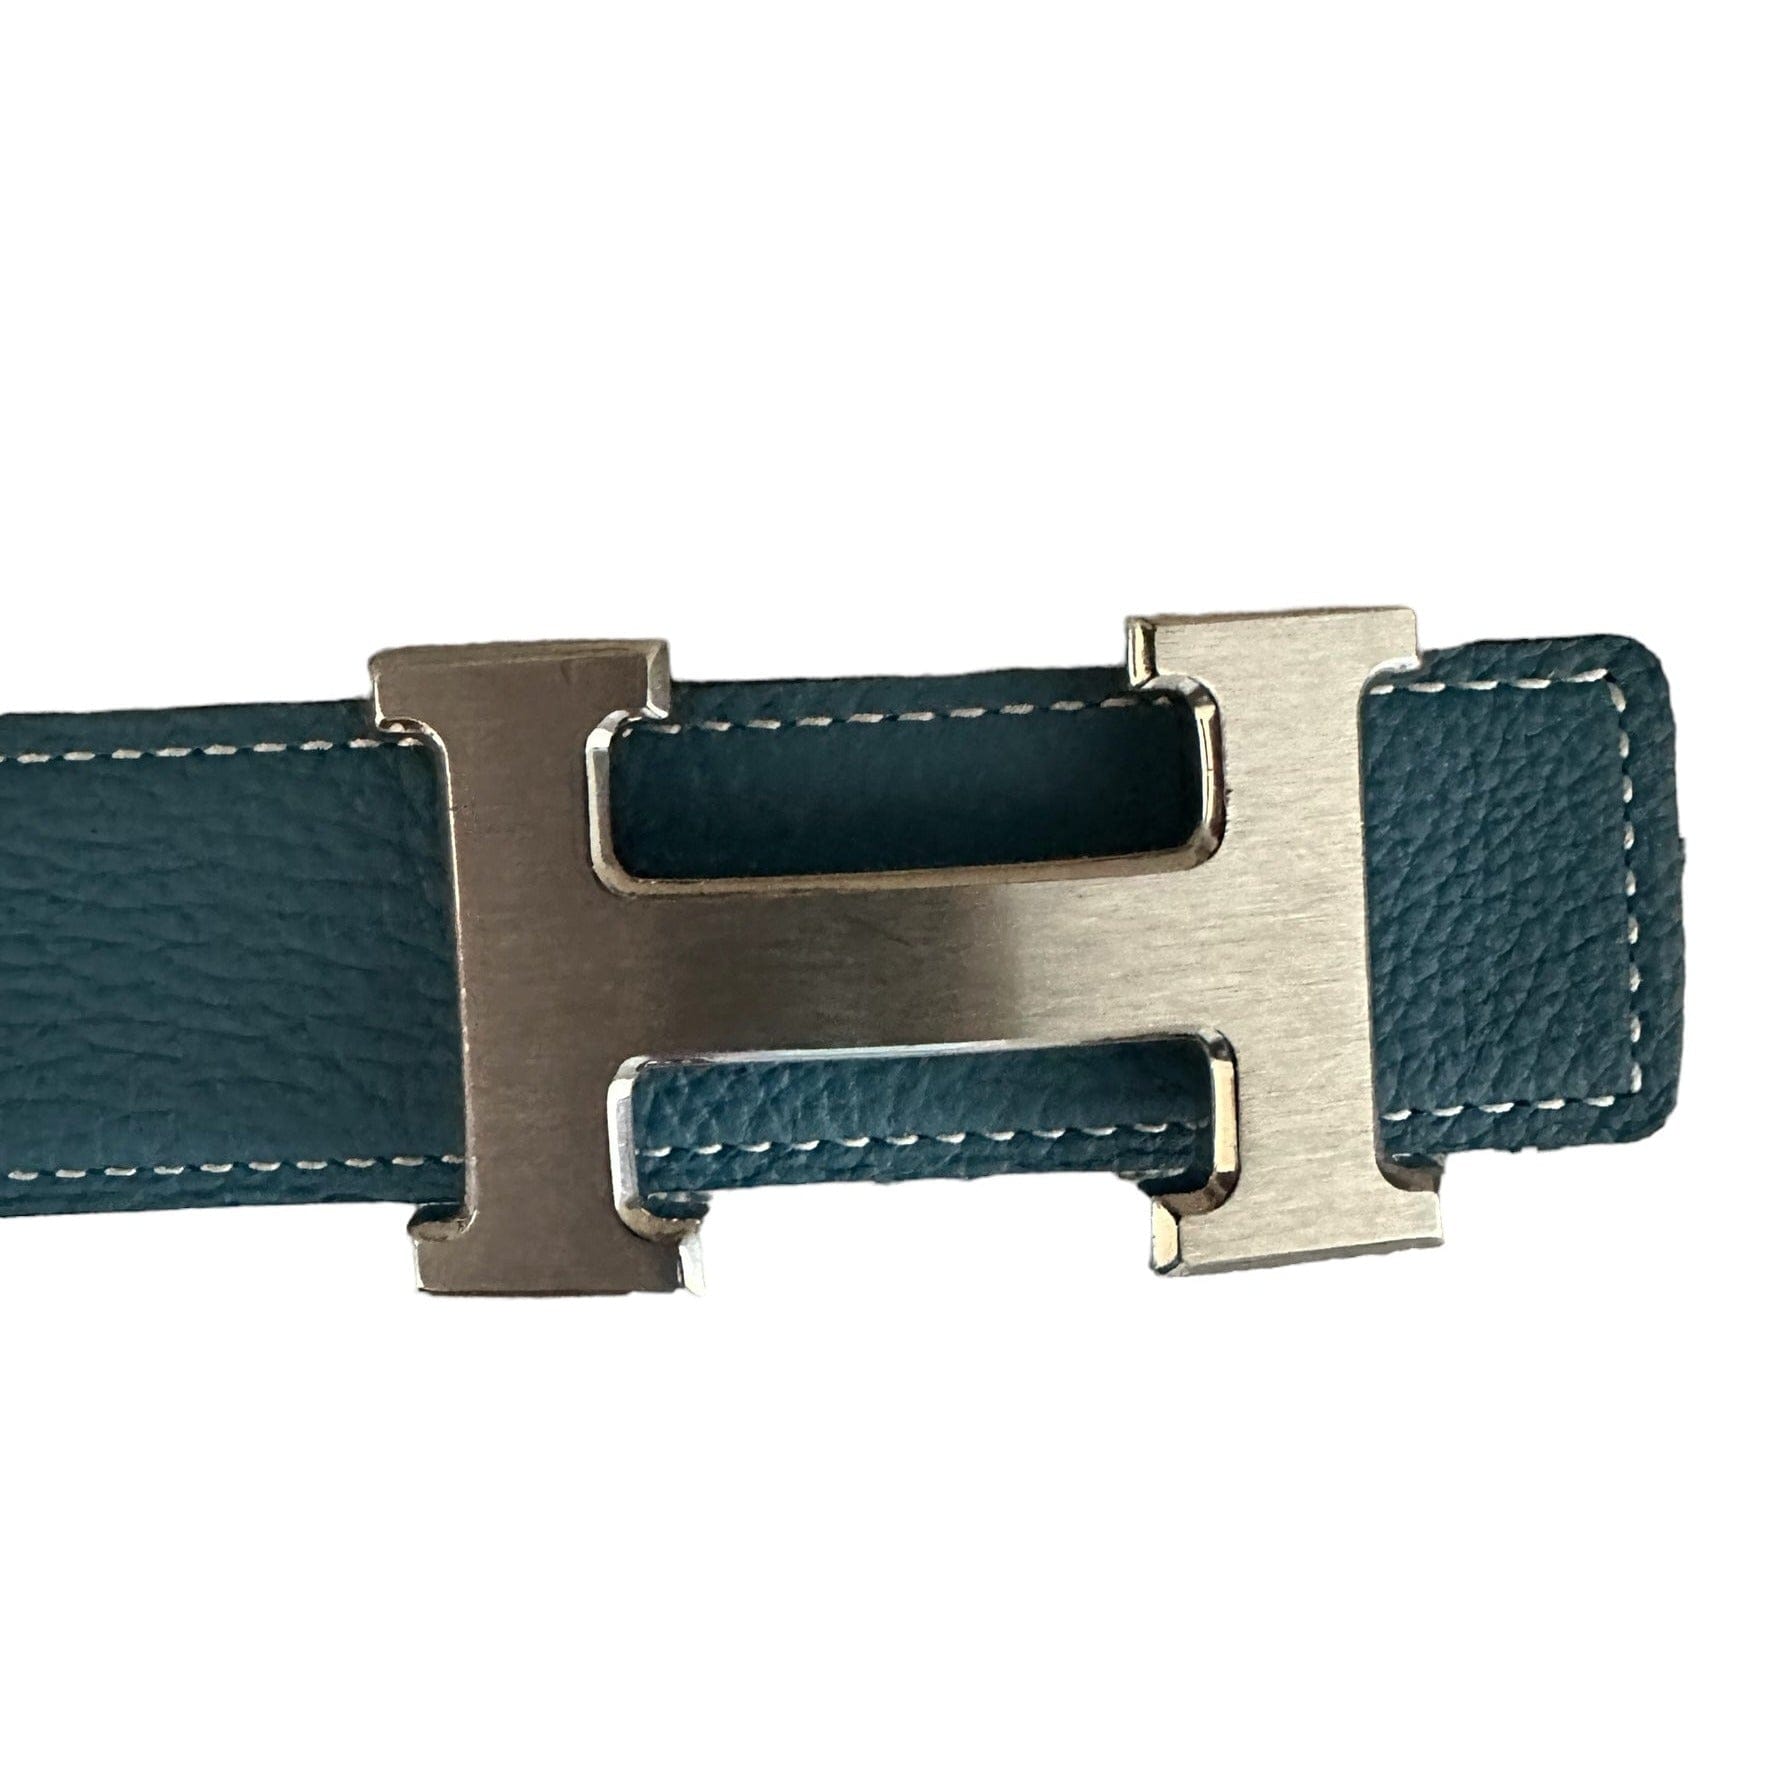 Luxury Promise Hermes Belt in Blue Jean/Black with PHW - 75cm